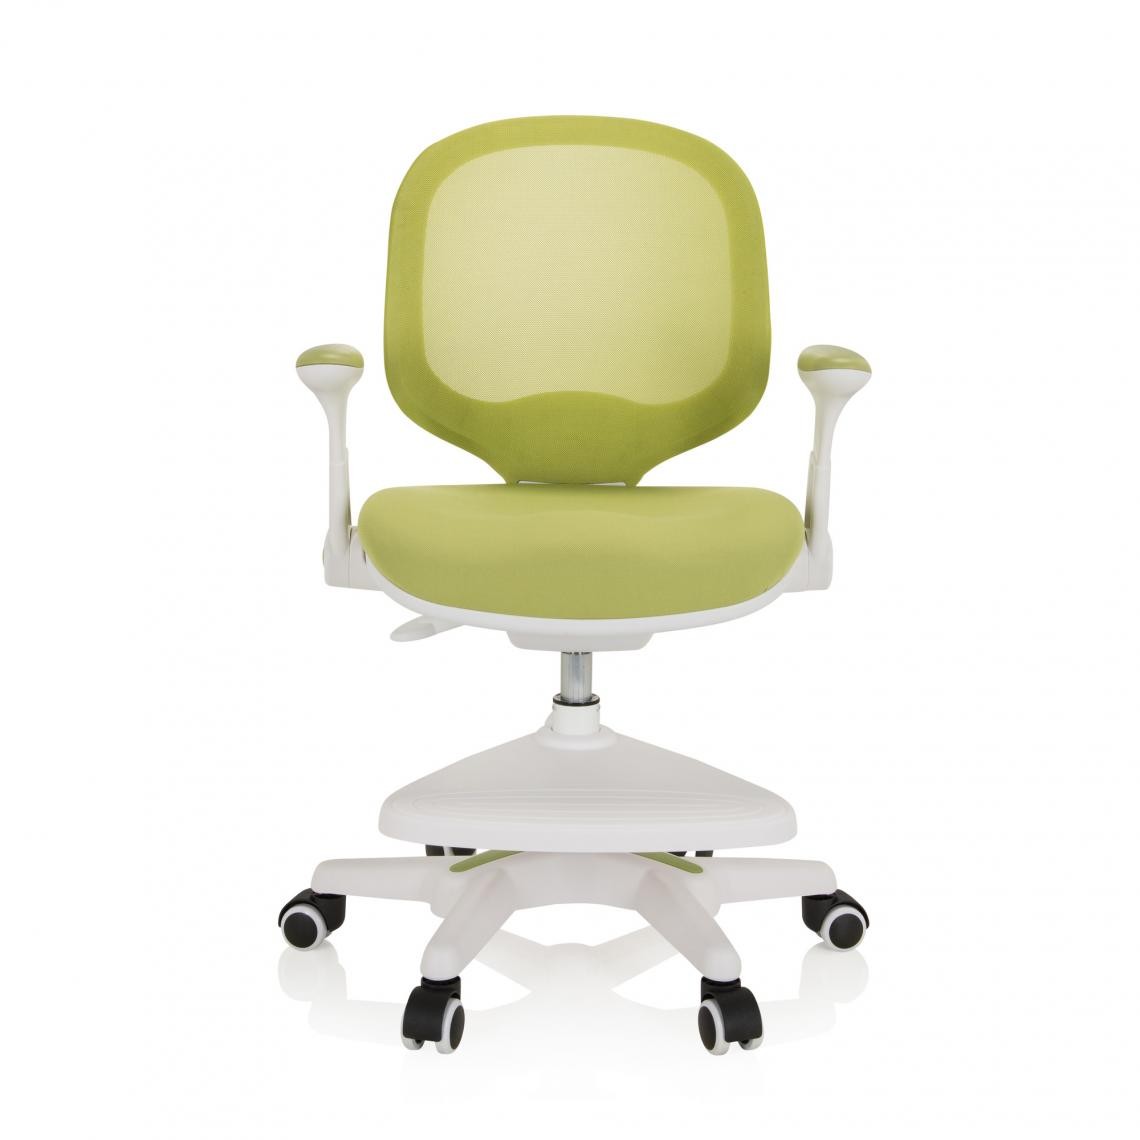 Hjh Office - Chaise de bureau pour enfant KID ERGO Tissu/Tissu maille vert hjh OFFICE - Chaises